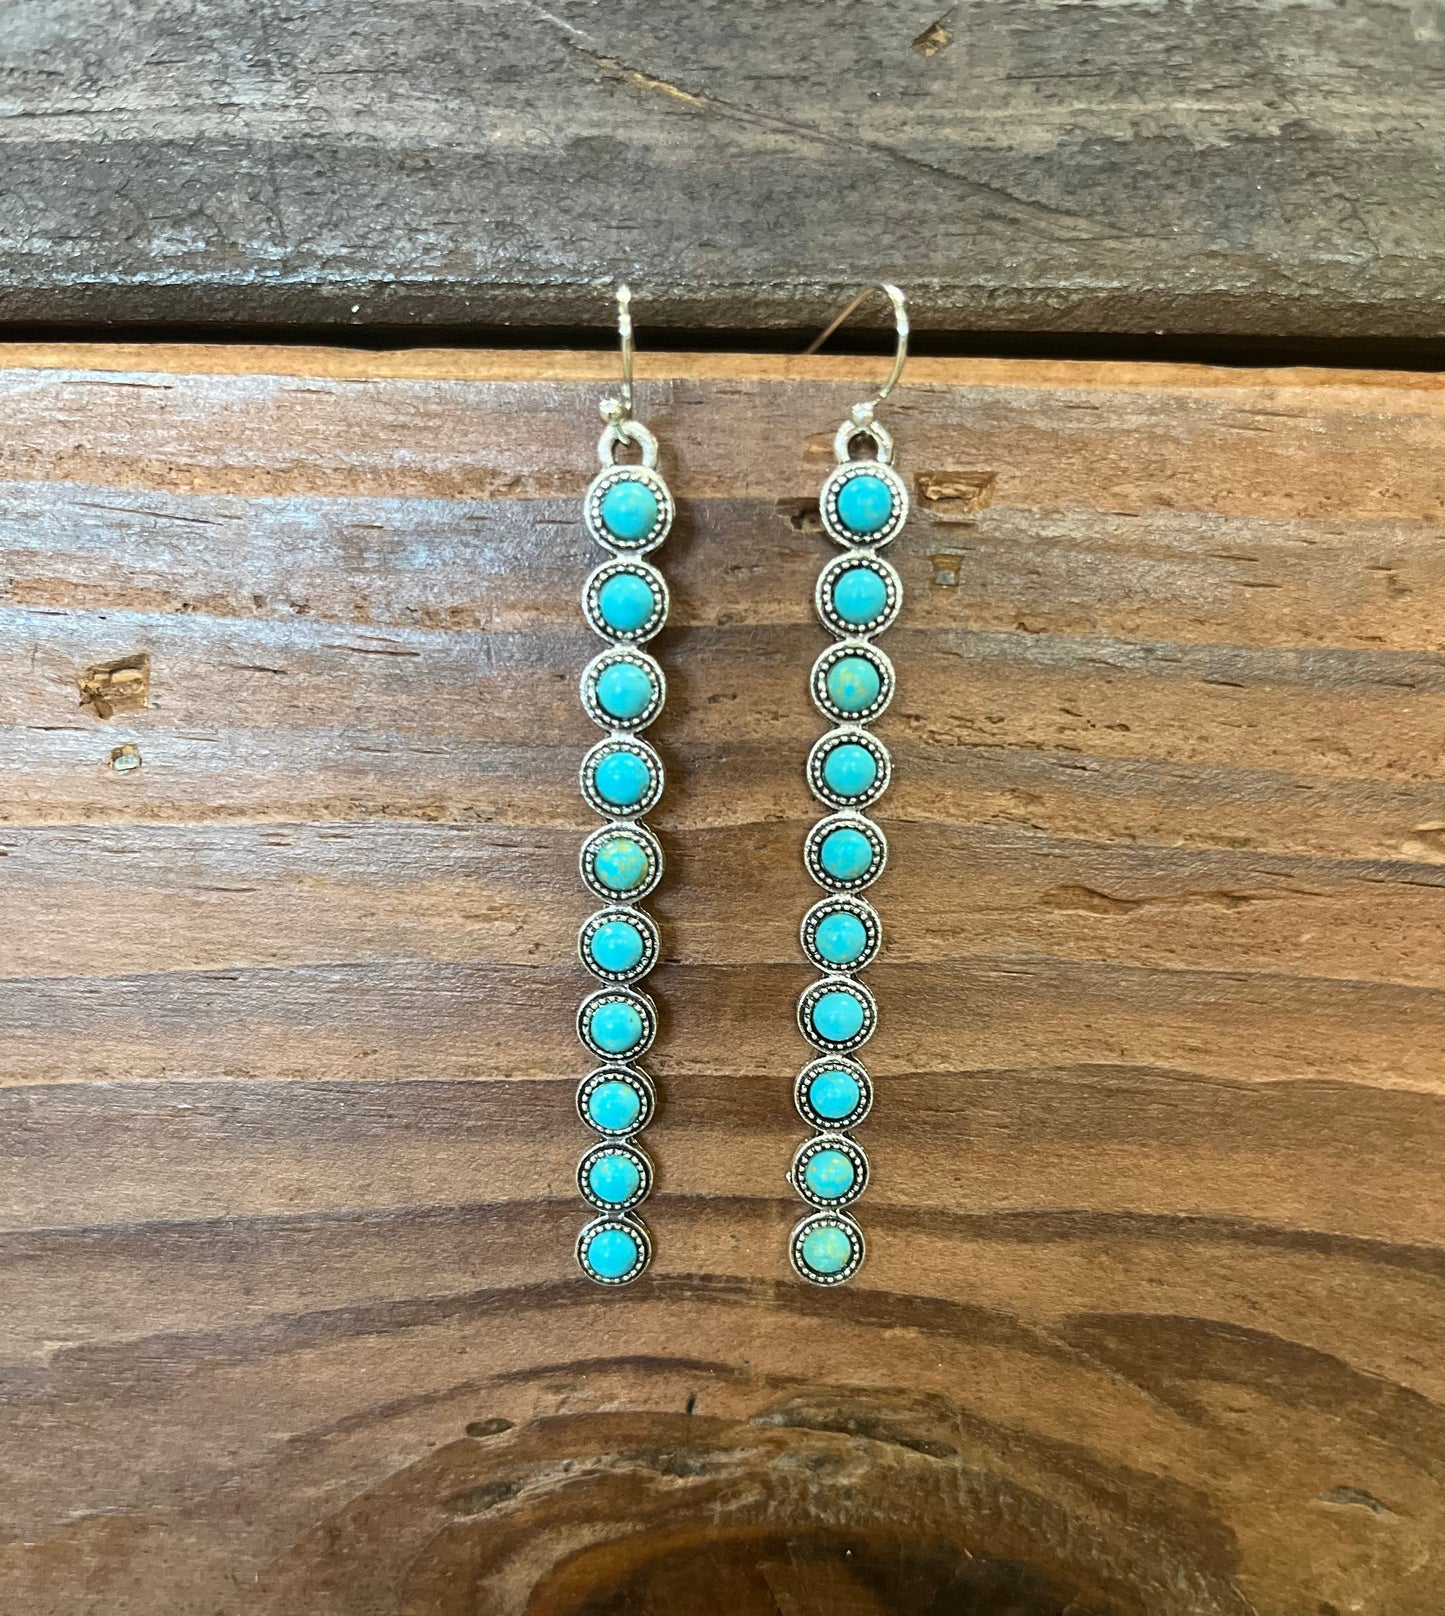 The Turquoise Dangle Earrings